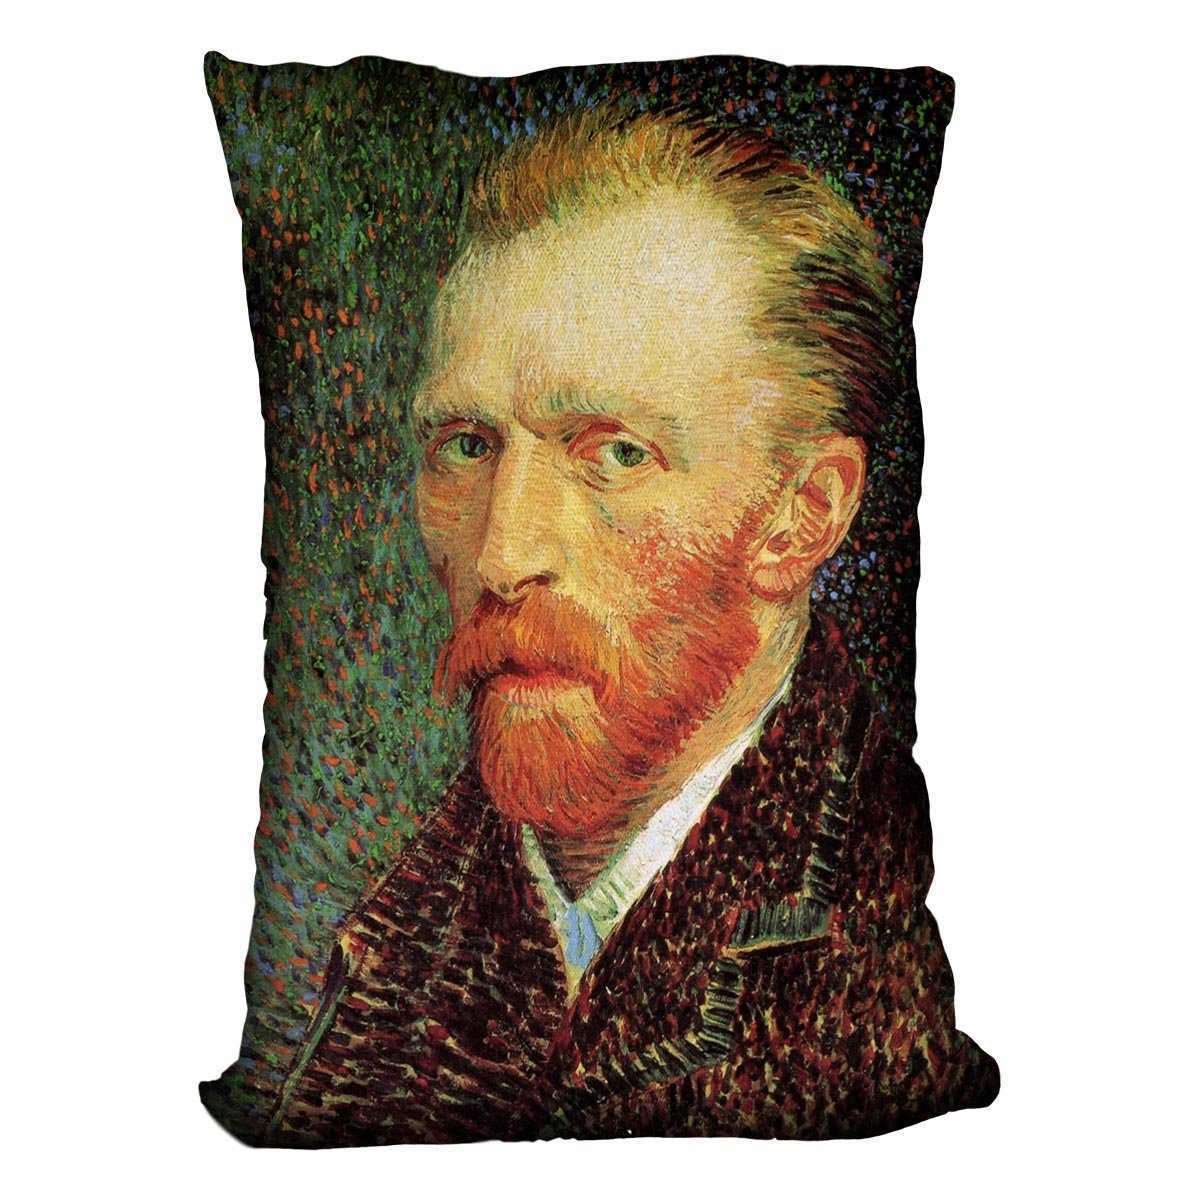 Self-Portrait 3 by Van Gogh Throw Pillow